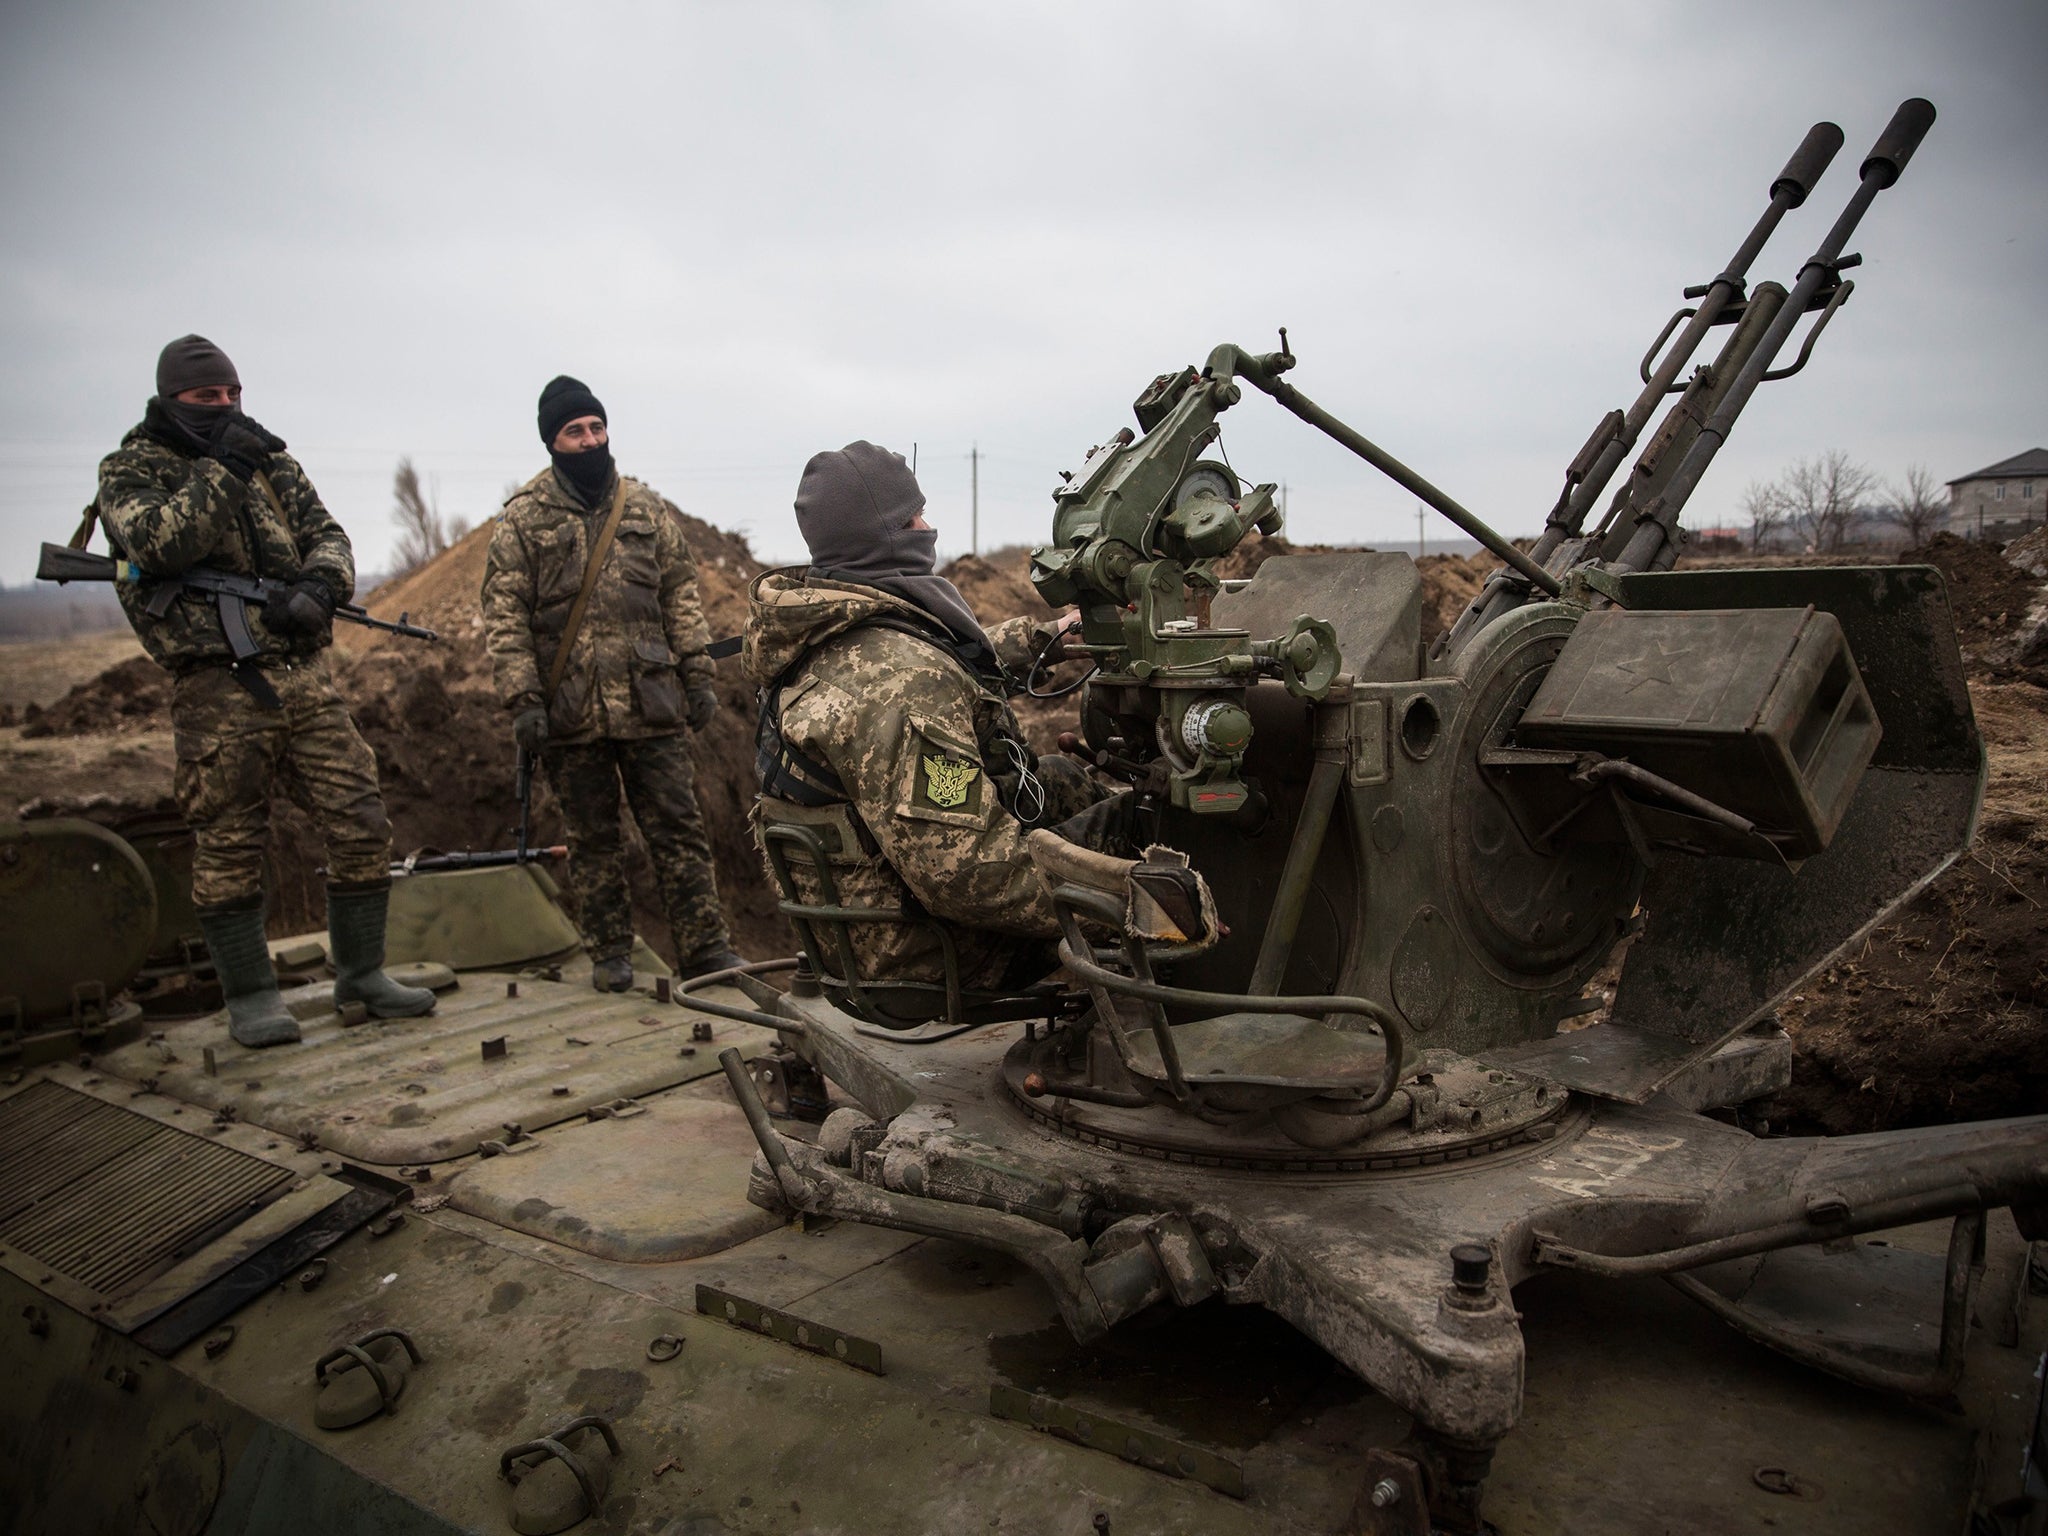 Petro Poroshenko says 1,657 Ukrainian troops have been killed in the conflict